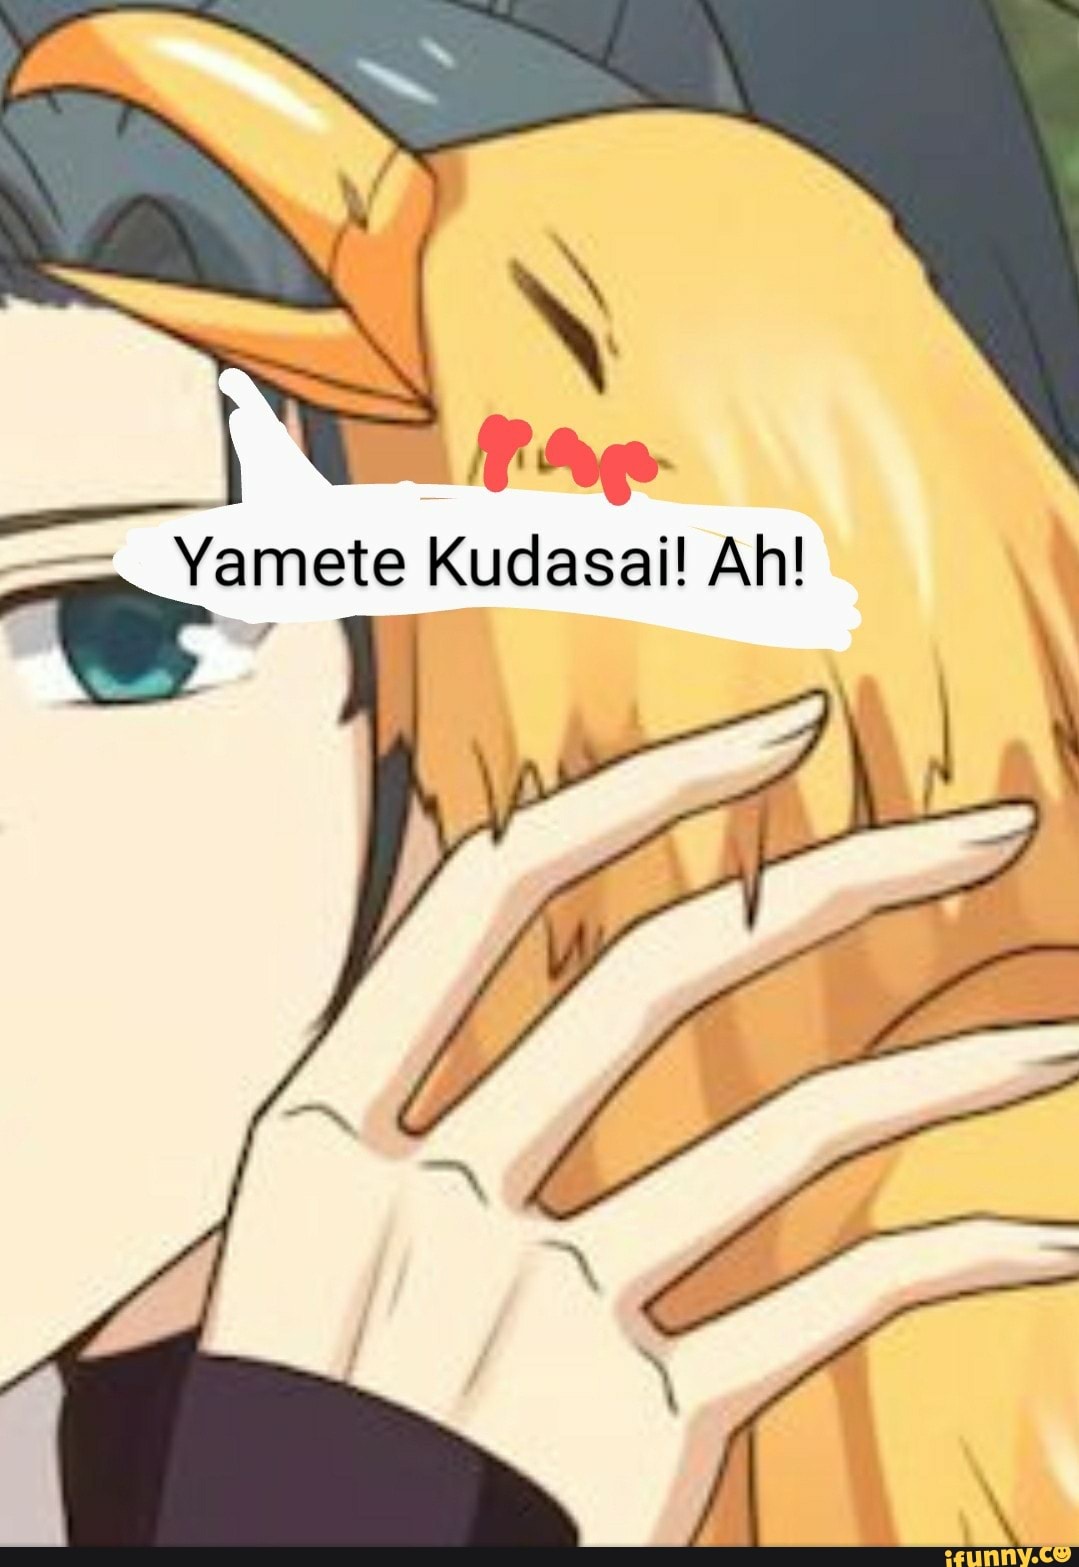 where did the yamete kudasai meme come from